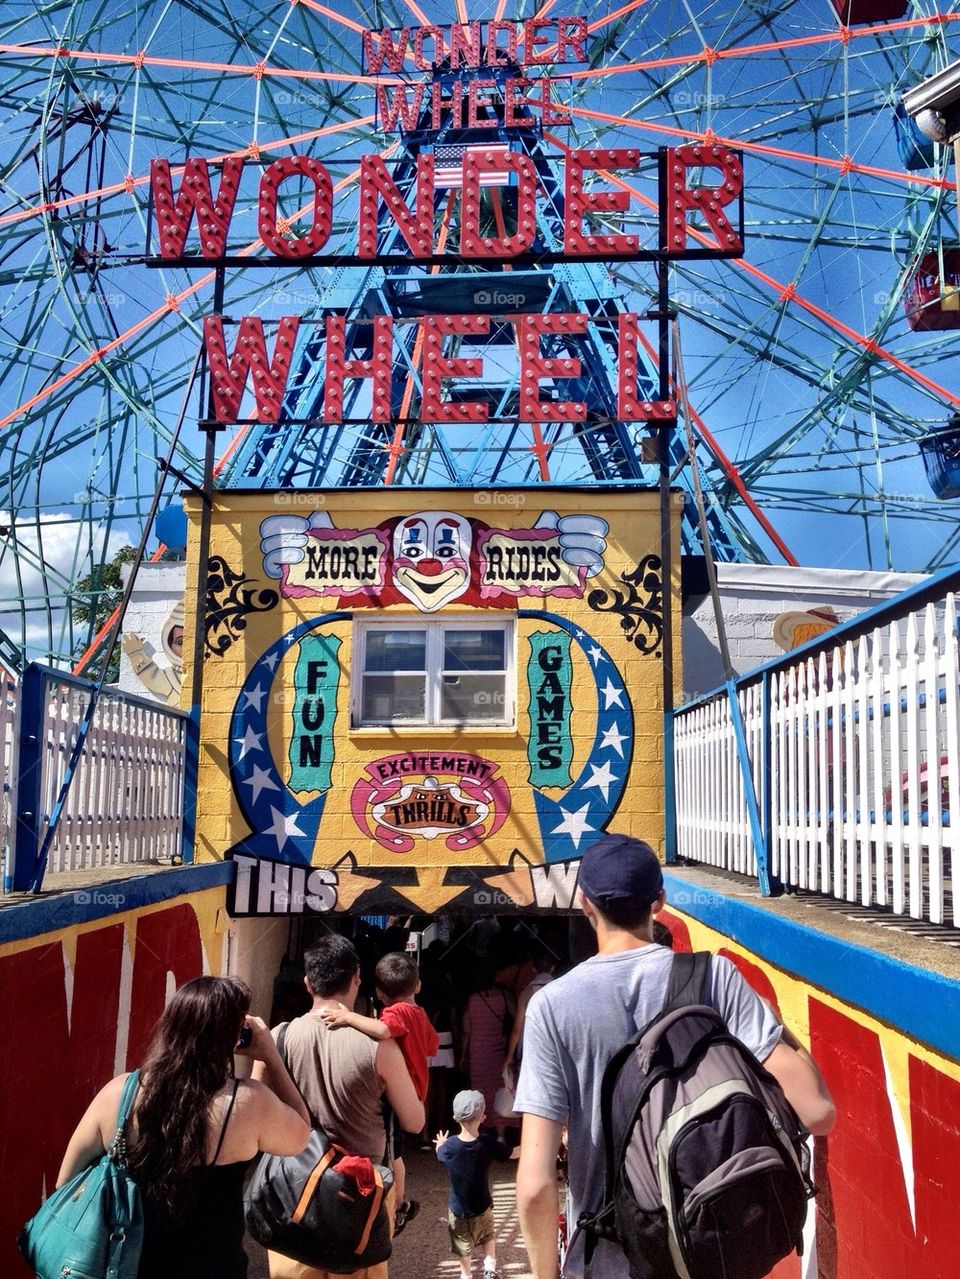 The Wonder Wheel of Coney Island